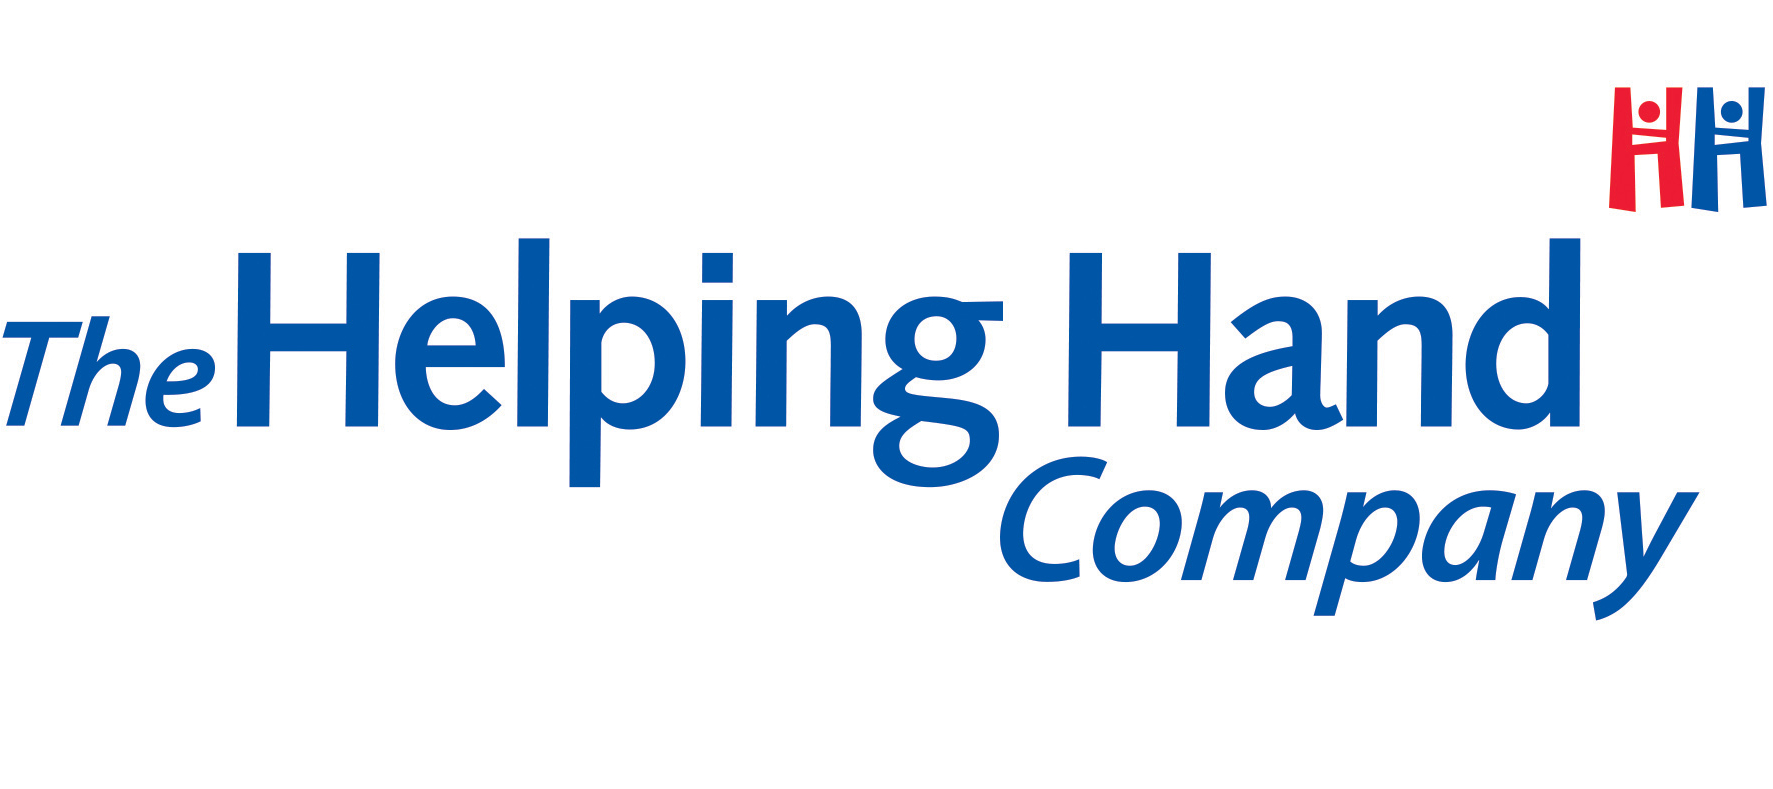 kousenaantrekker small helping-hand logo